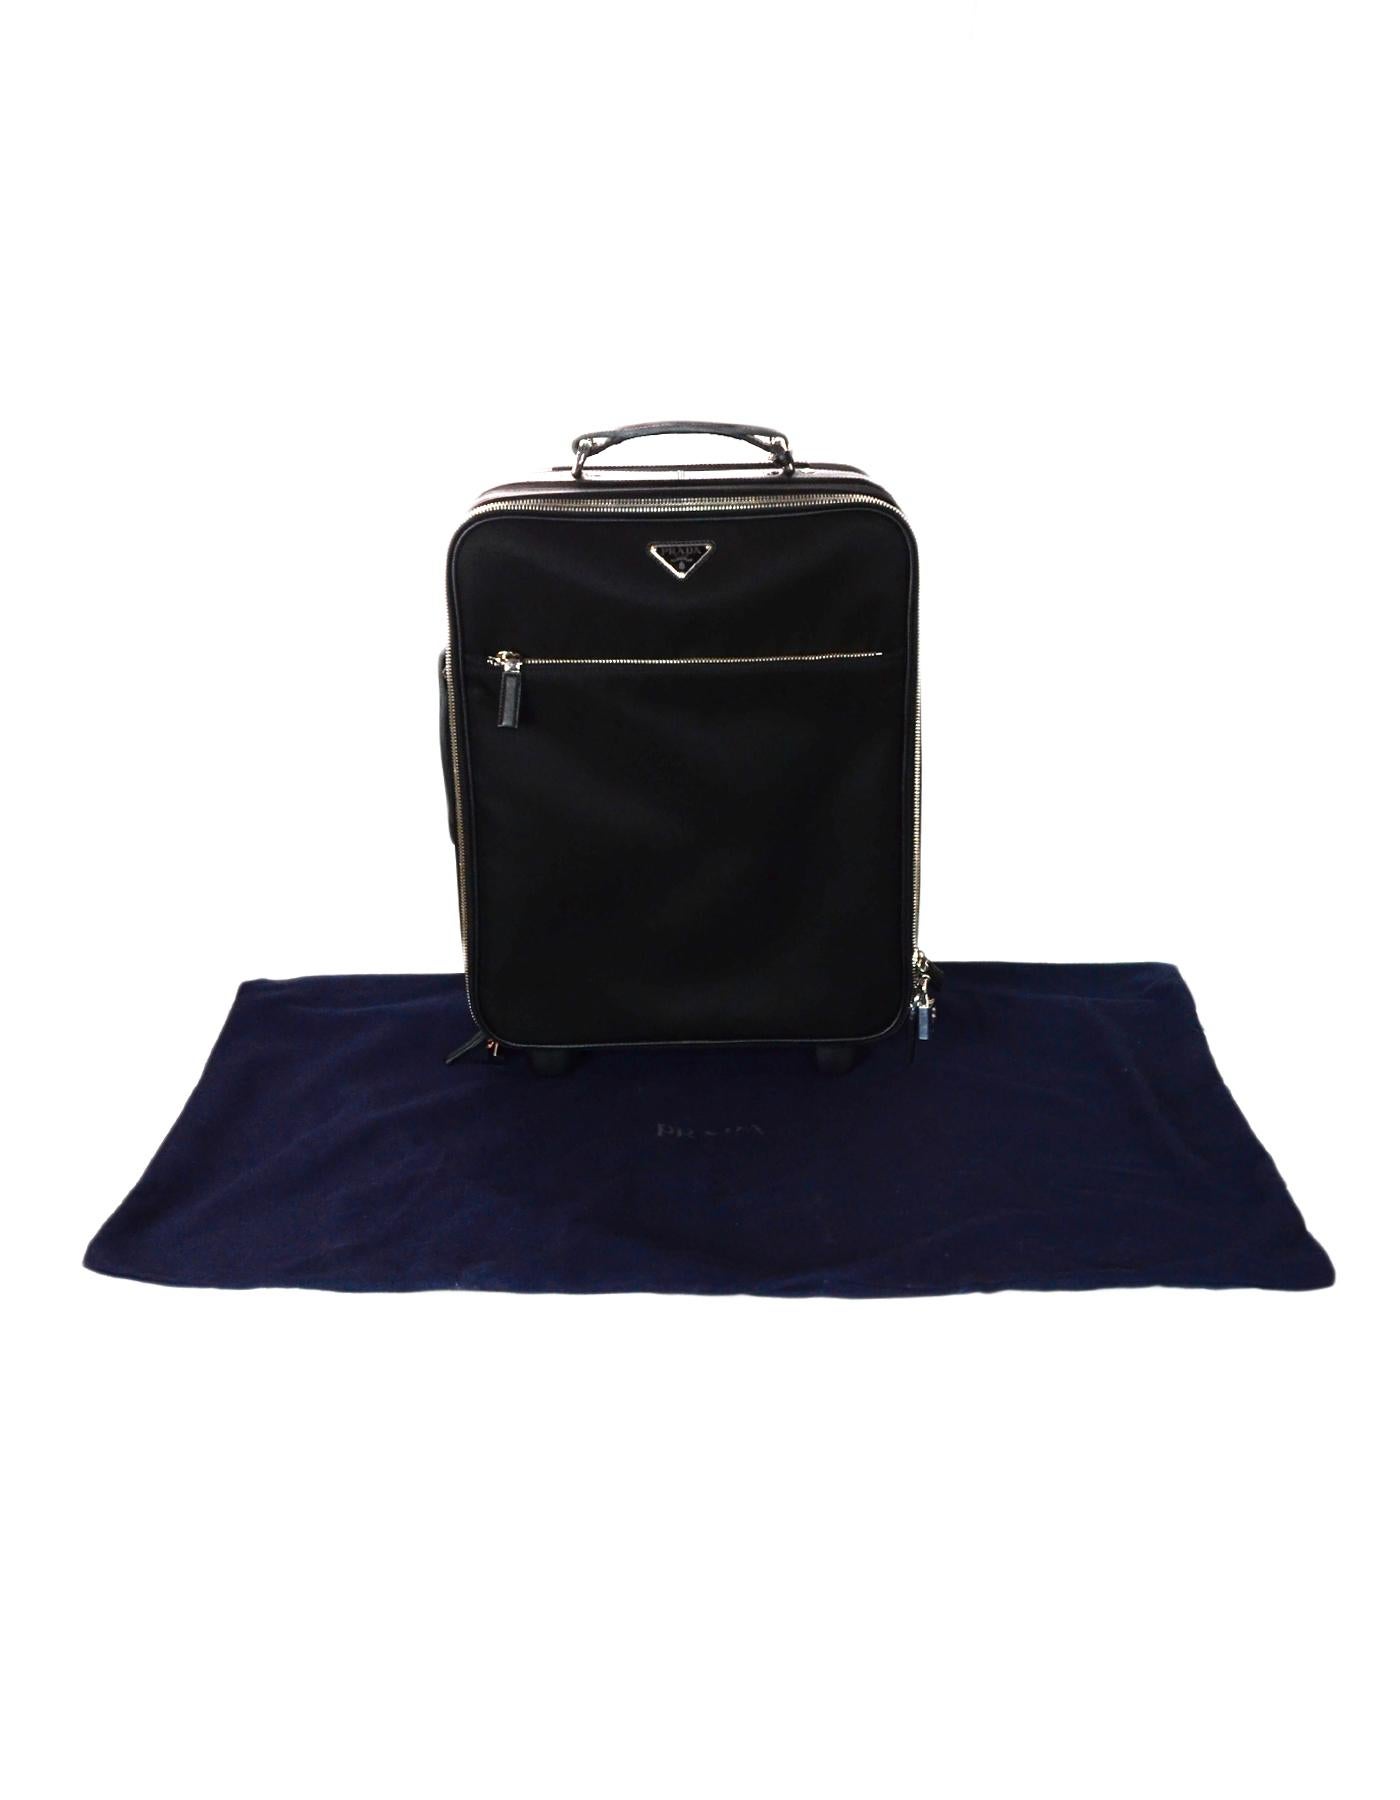 Prada Black Nylon/Saffiano Leather 40cm Carry-On Bag Rolling Luggage Suitcase 4